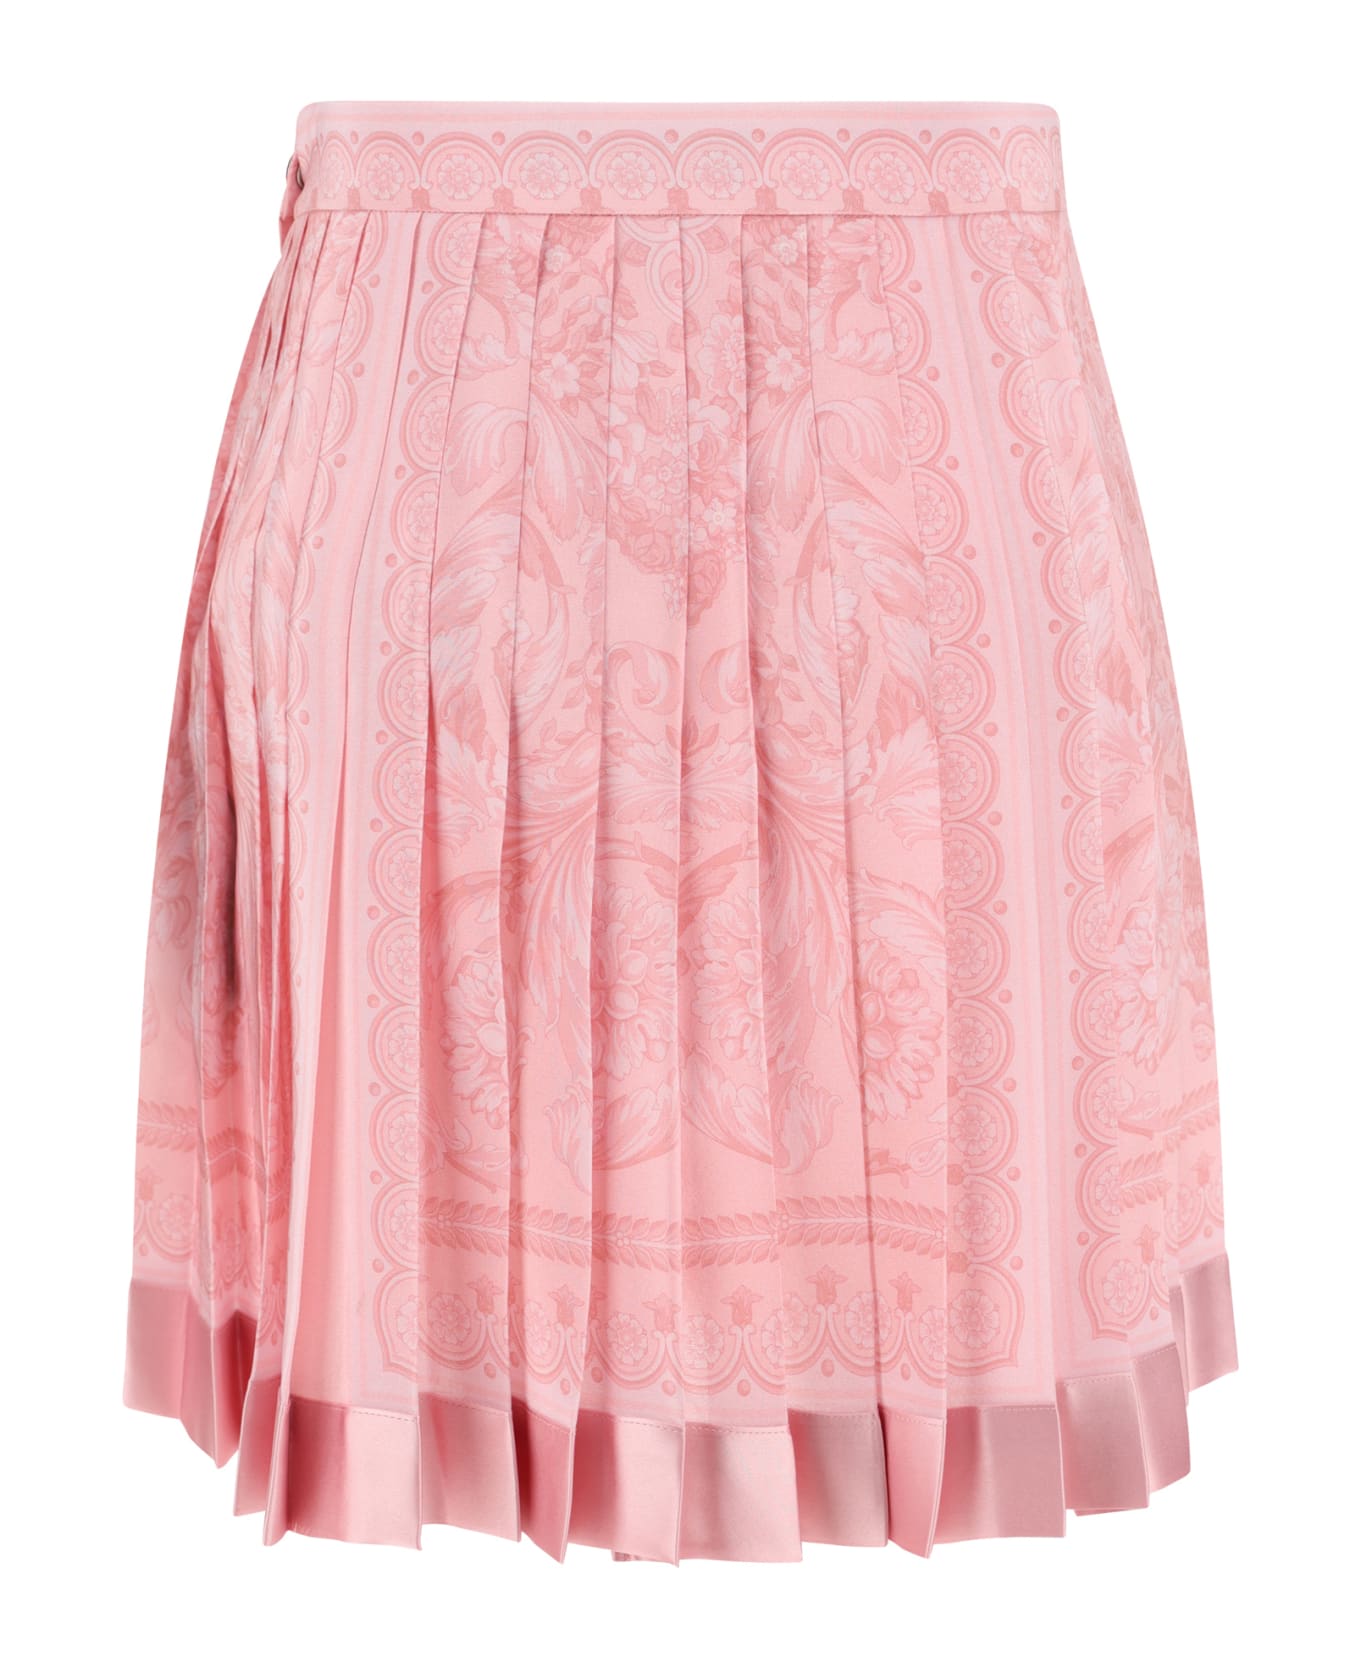 Versace Mini Skirt - Pale Pink スカート